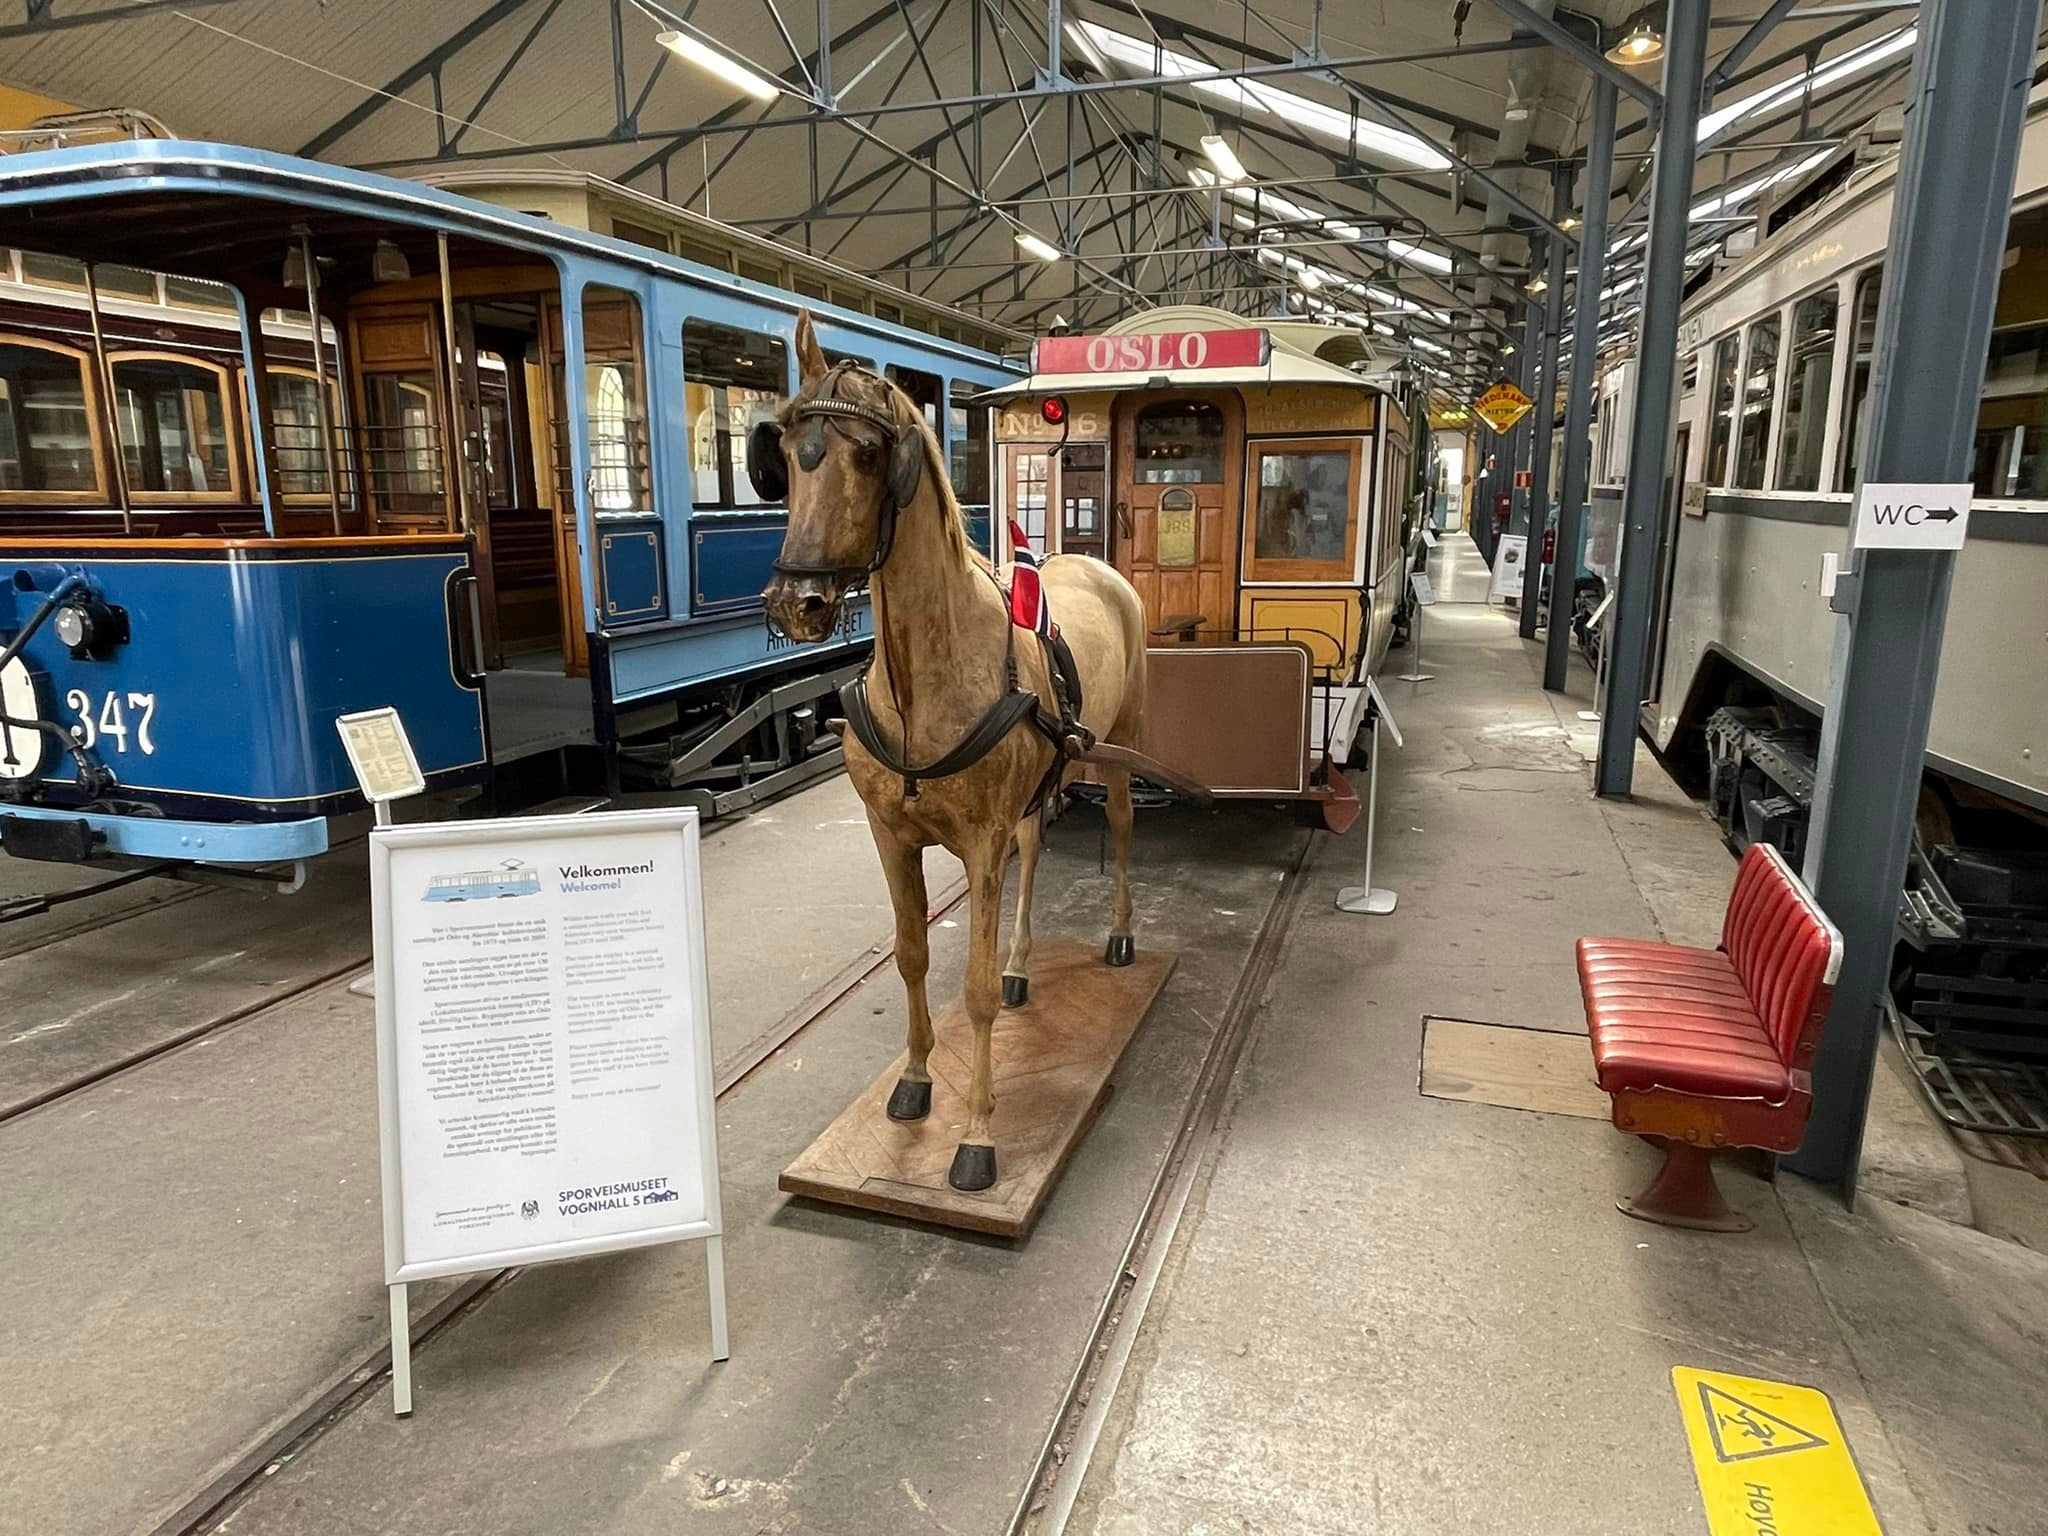 Oslo Transport Museum